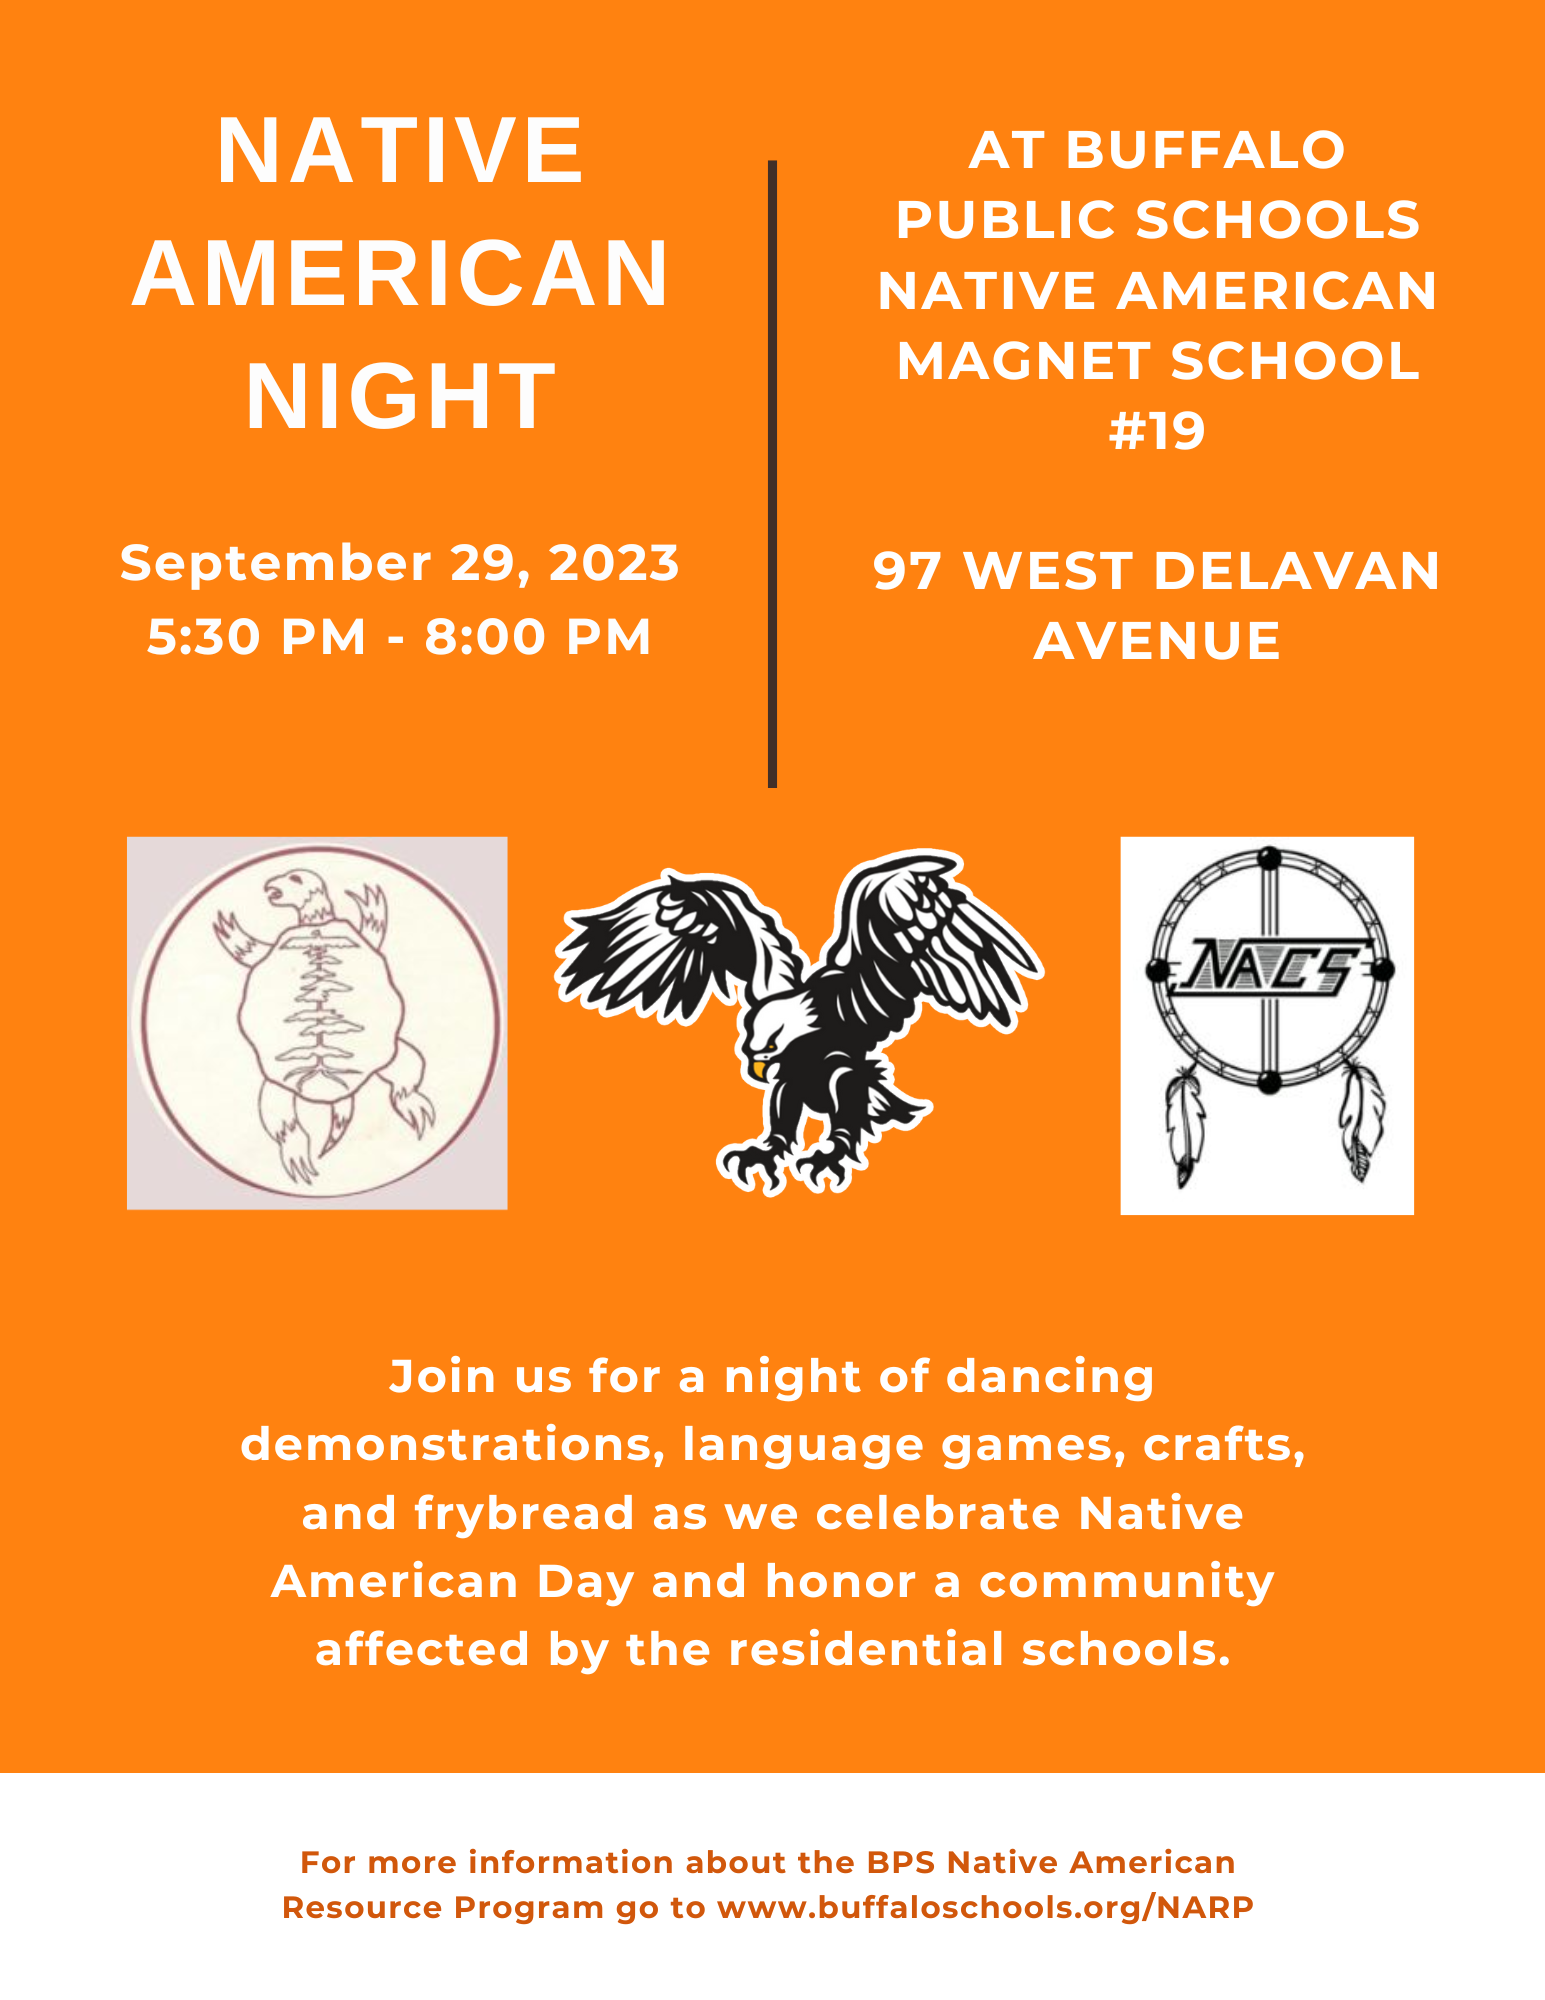 Native American Night At Buffalo Public Schools Navtive American Magnet School #19